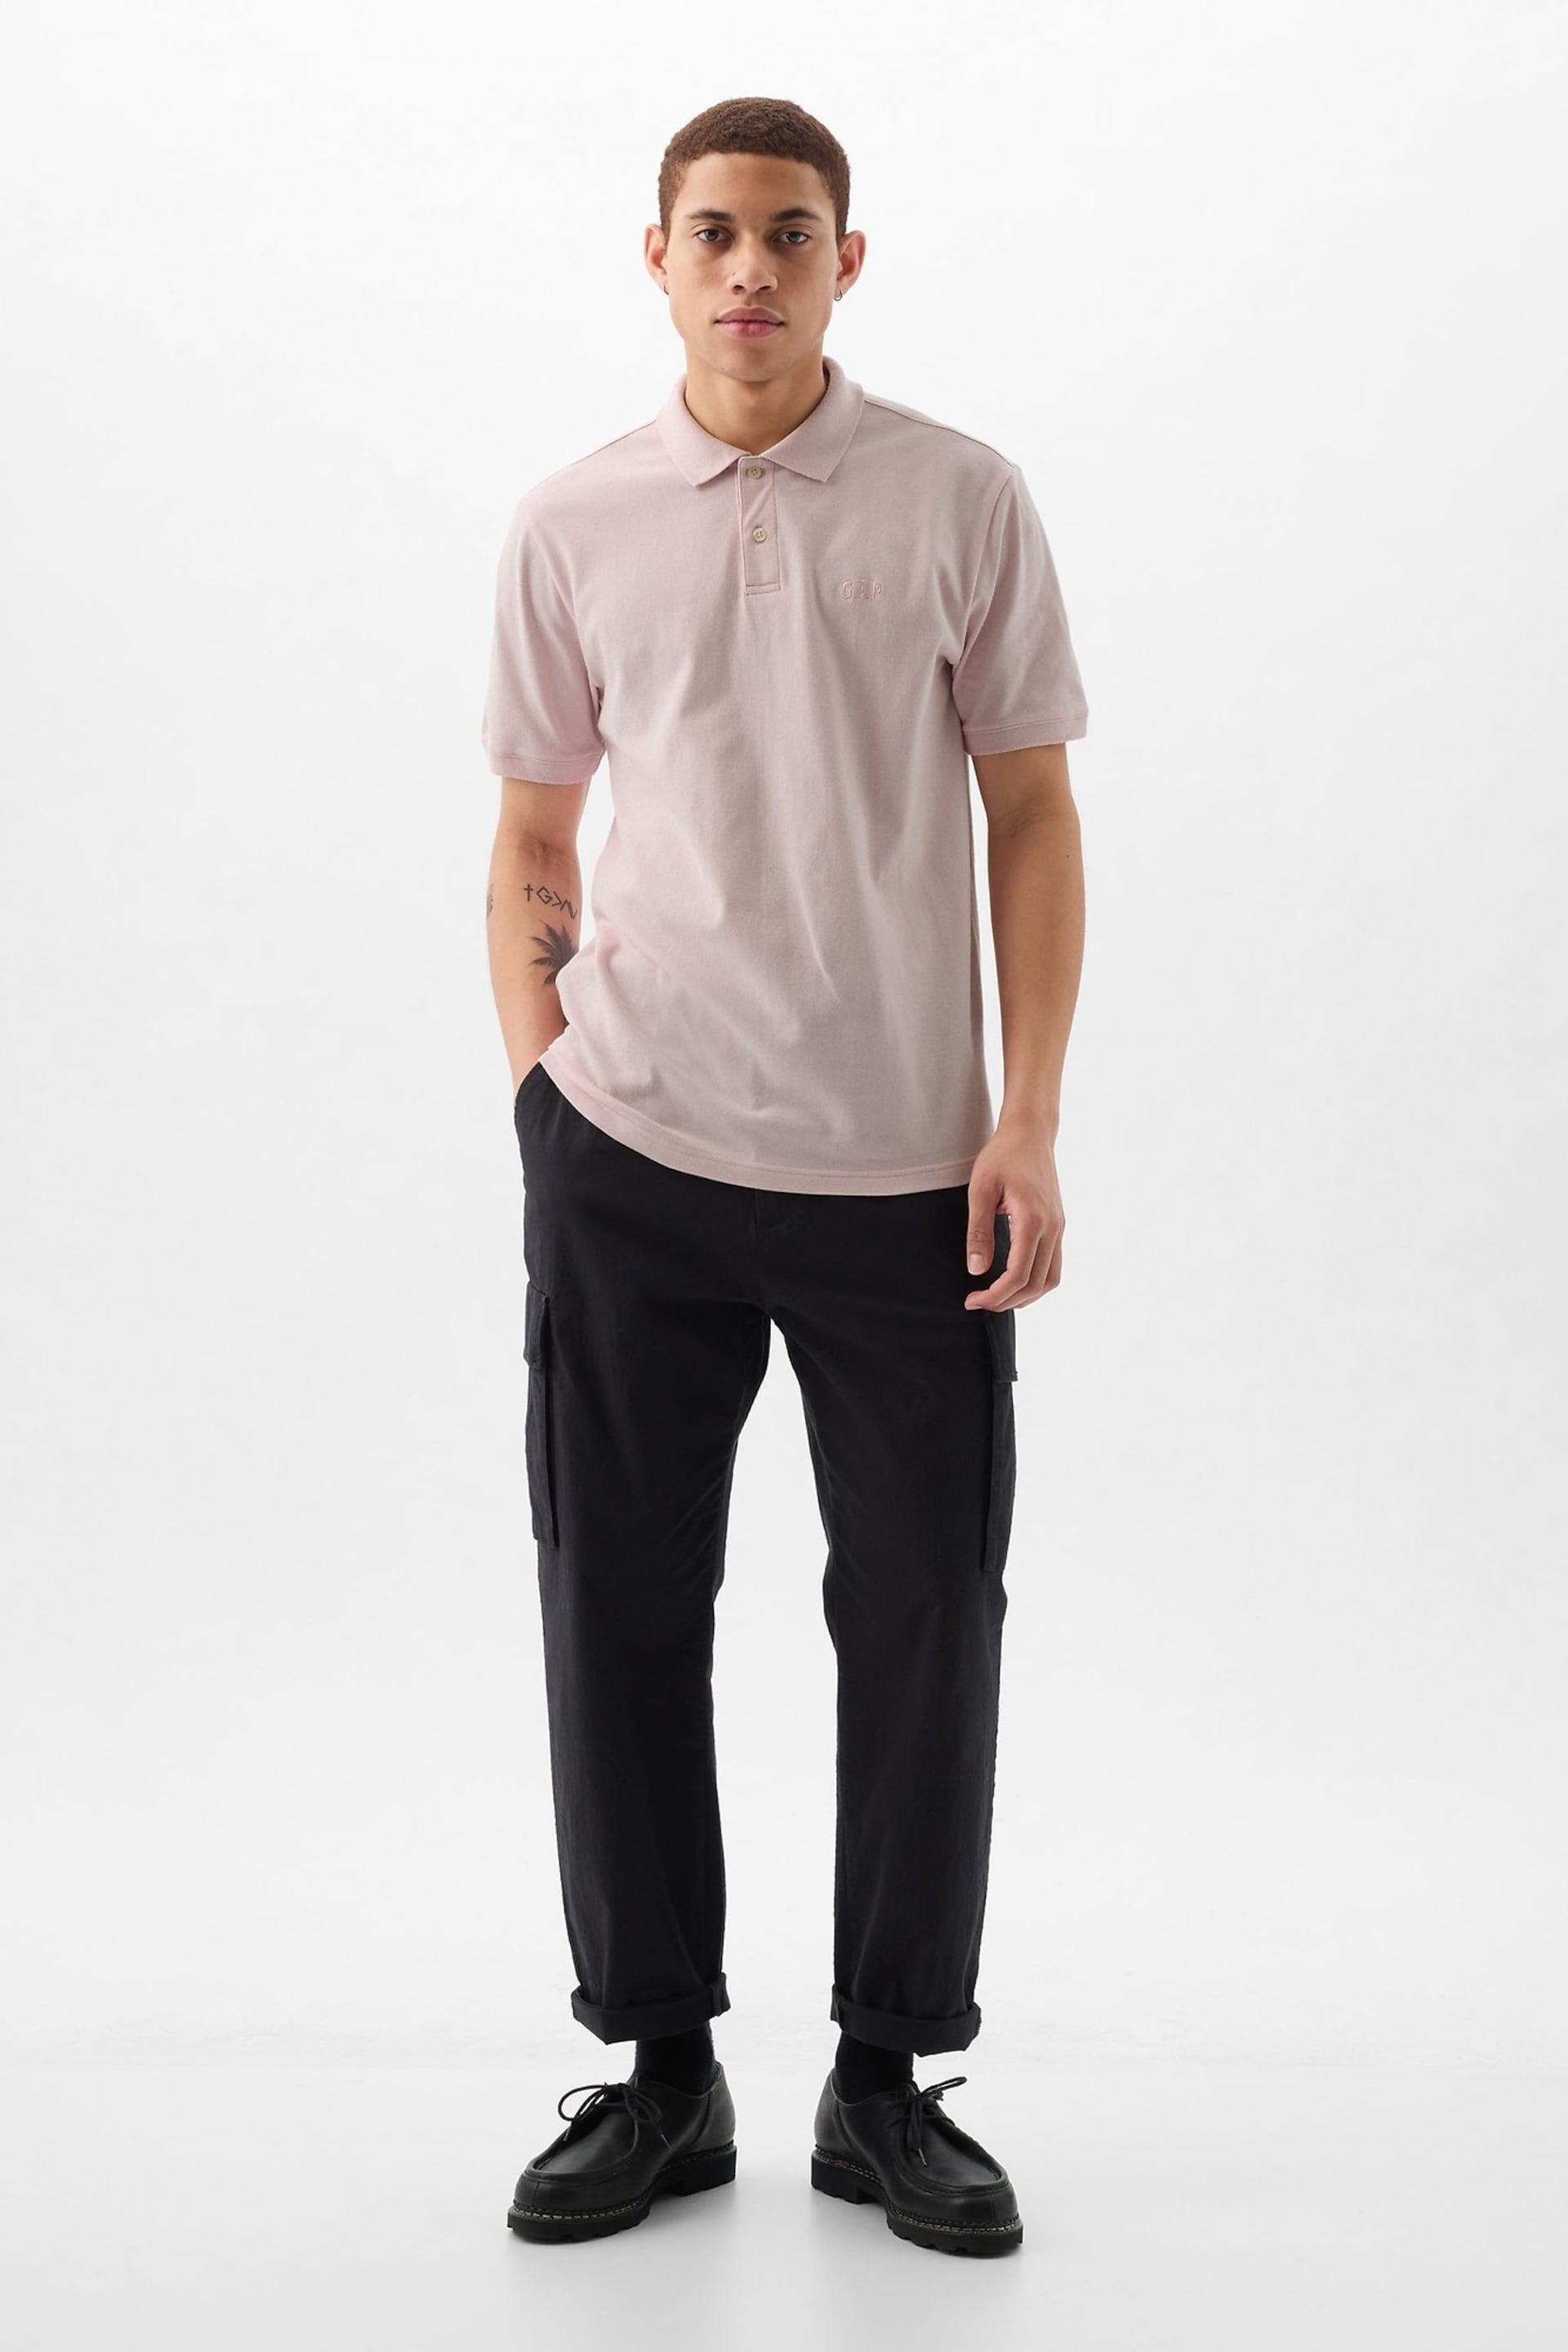 Gap Pink Logo Pique Short Sleeve Polo Shirt - Image 3 of 3